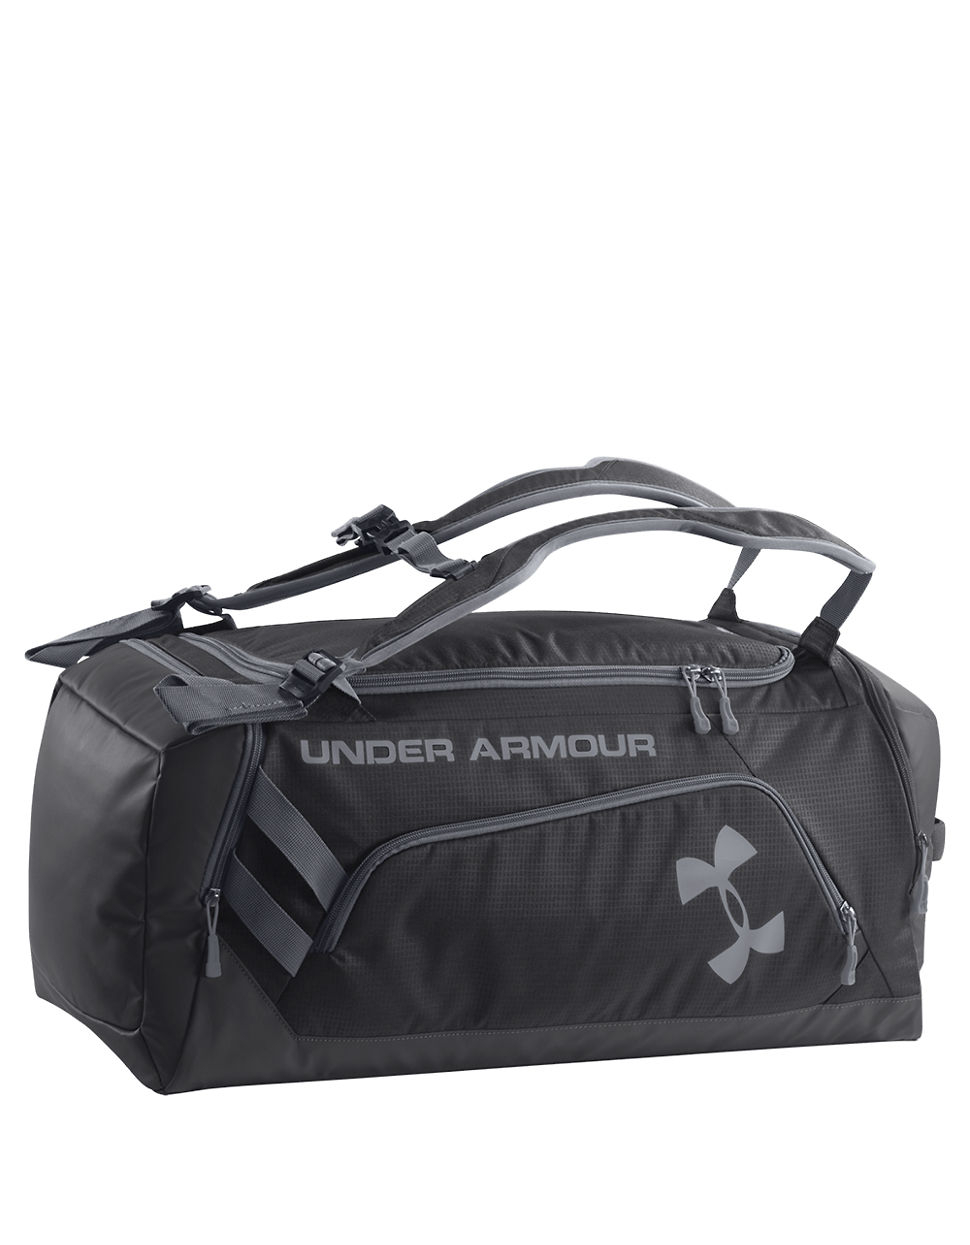 under armor storm bag